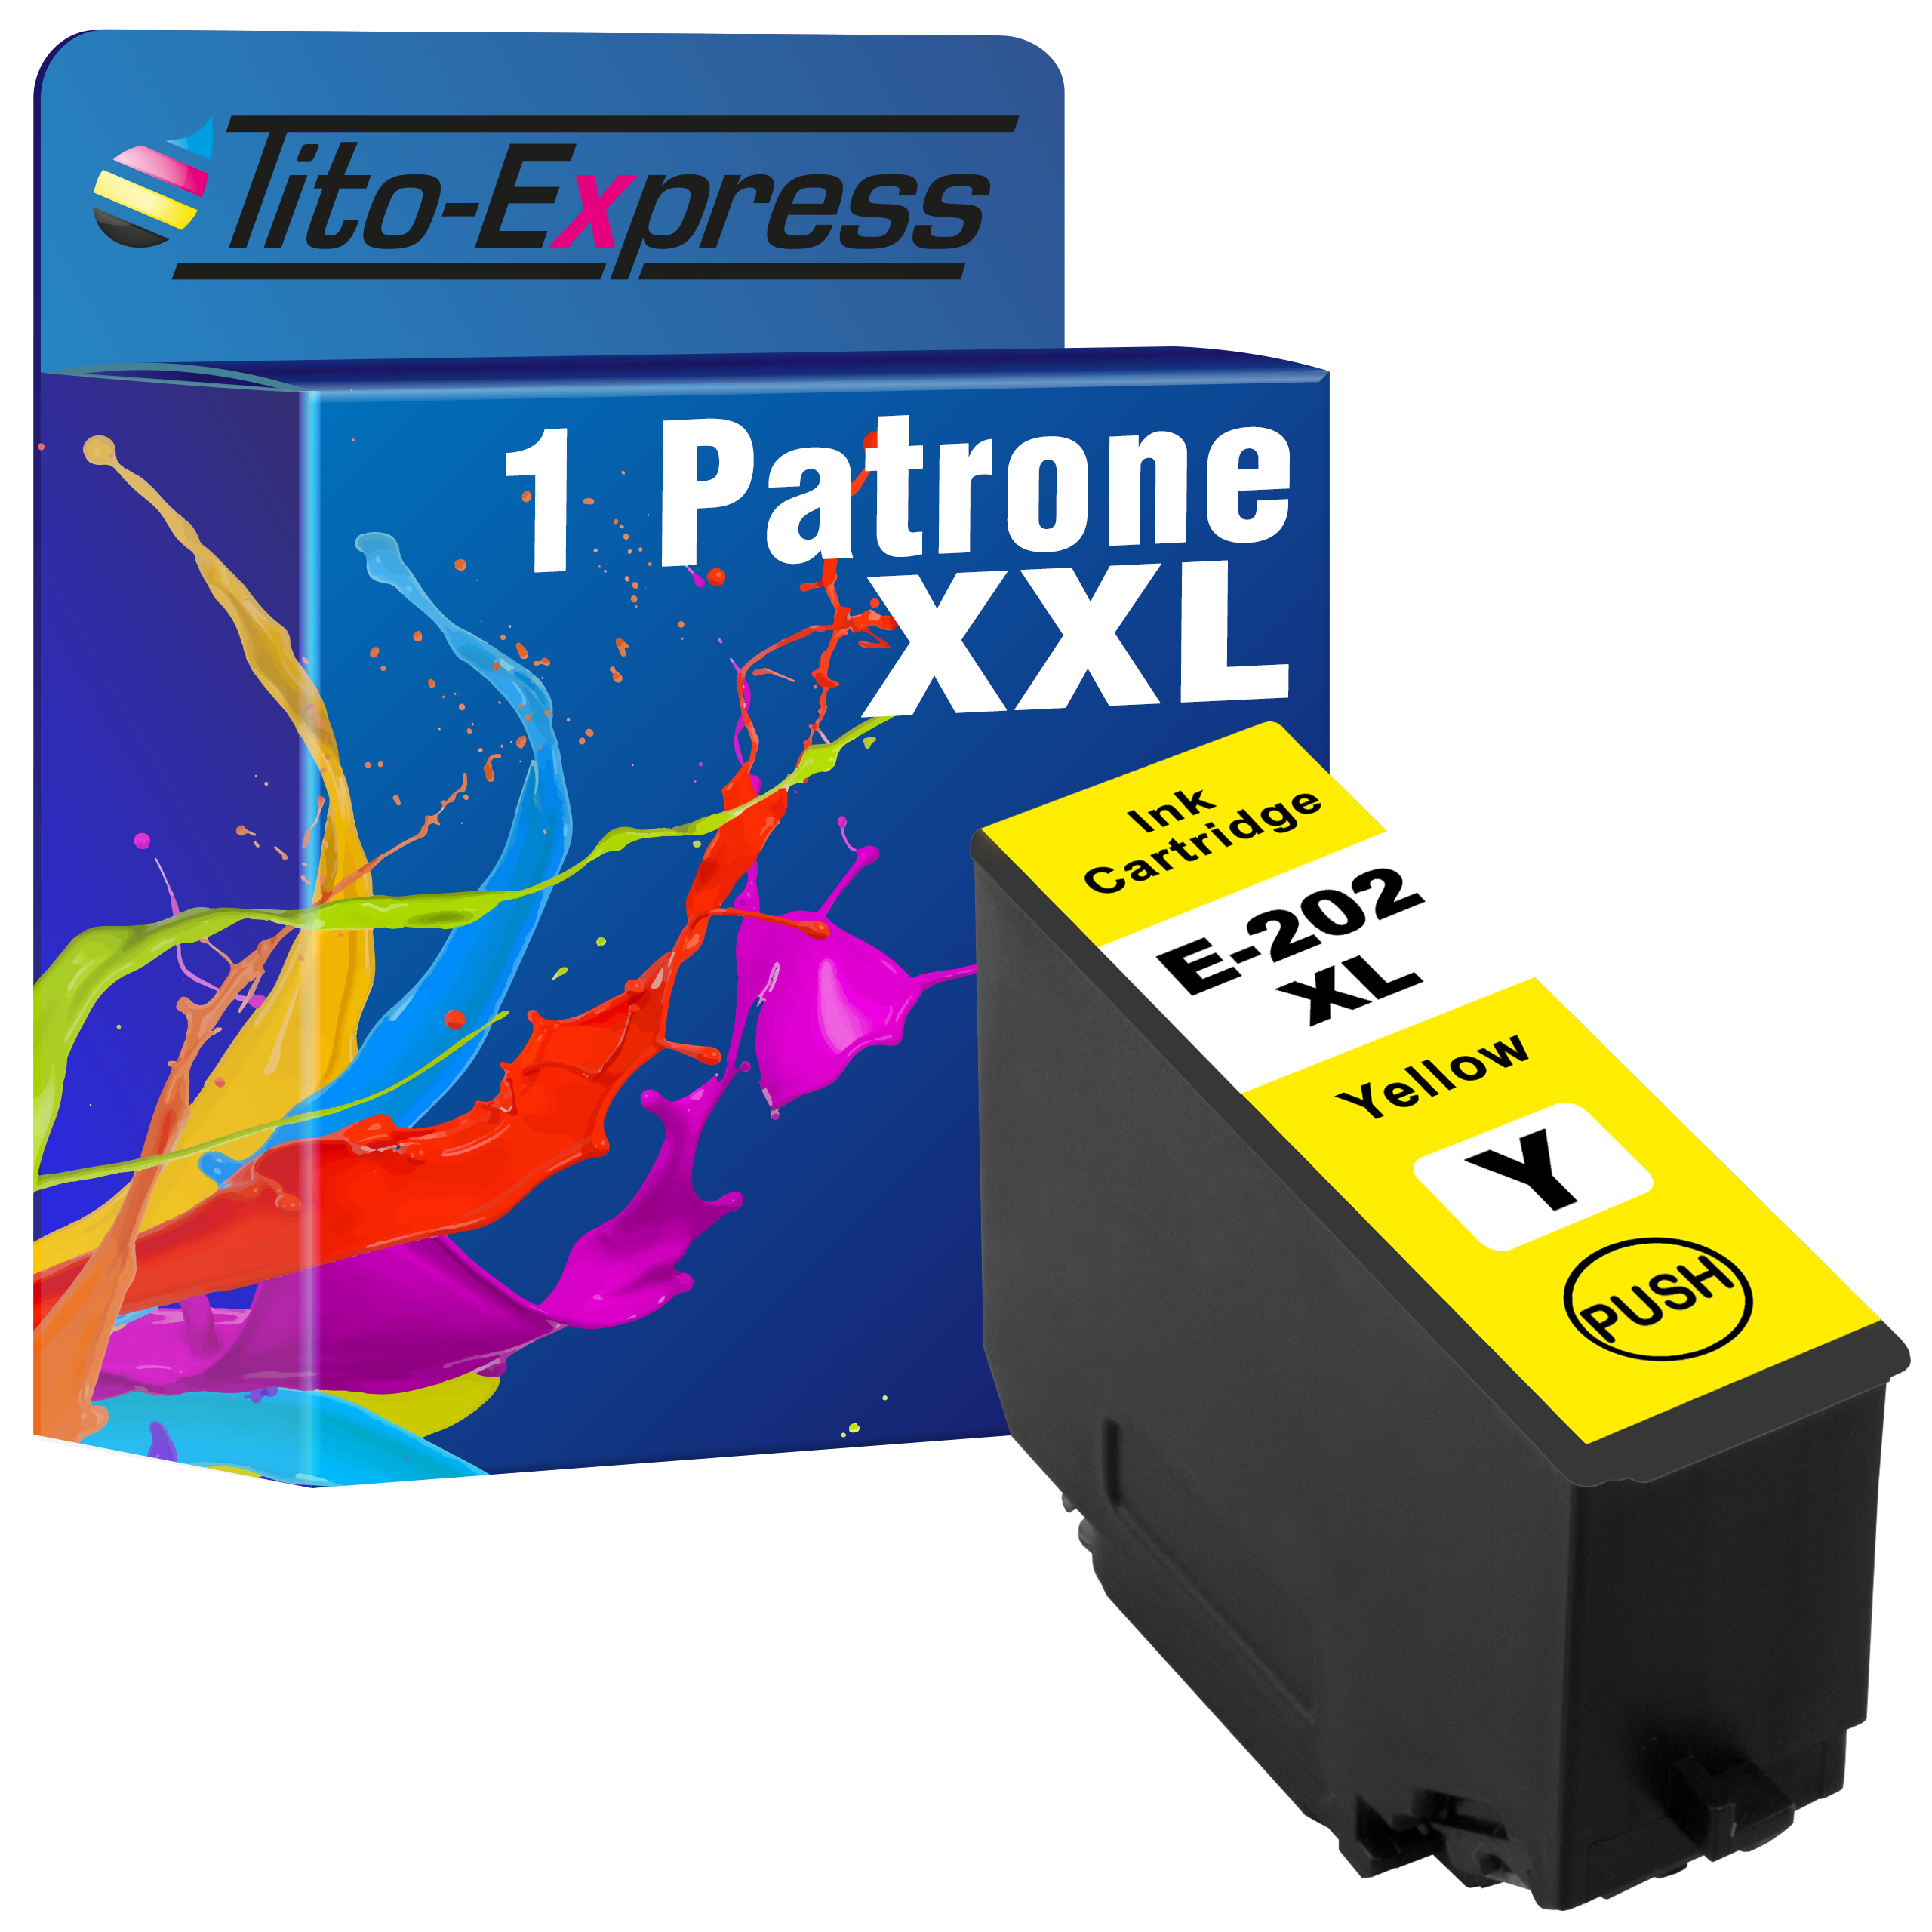 Patrone XL 1 Epson TITO-EXPRESS Tintenpatrone 202 ersetzt PLATINUMSERIE (C13T02H44010) Yellow